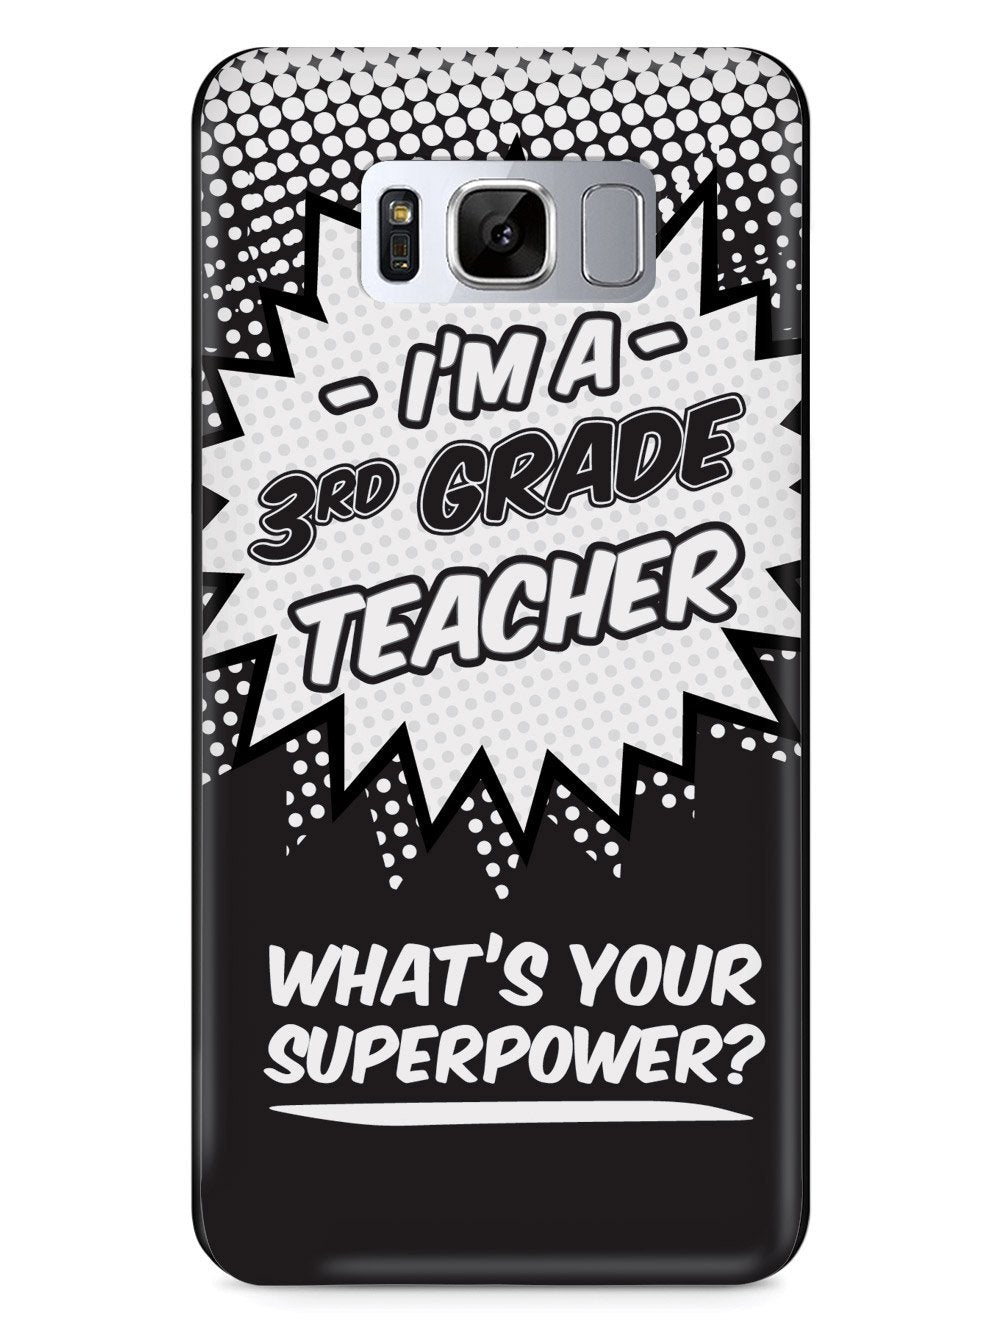 3rd Grade Teacher - What's Your Superpower? Case